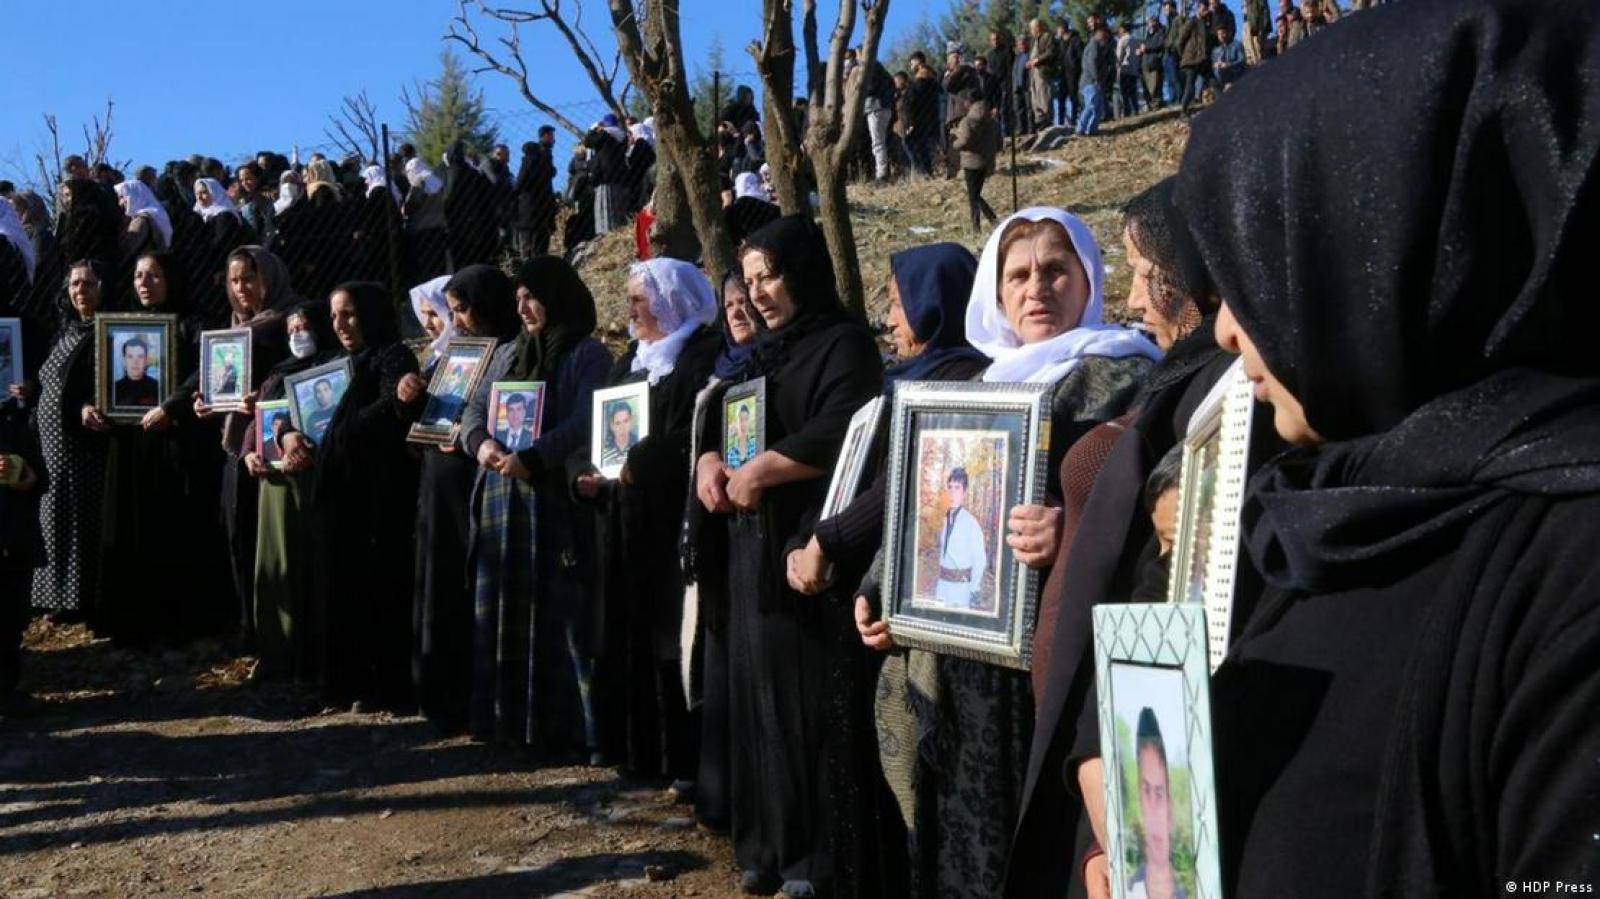 ommemoration of the tenth anniversary of the Roboski Massacre, 28 December 2021, Roboski (location), HDP Press